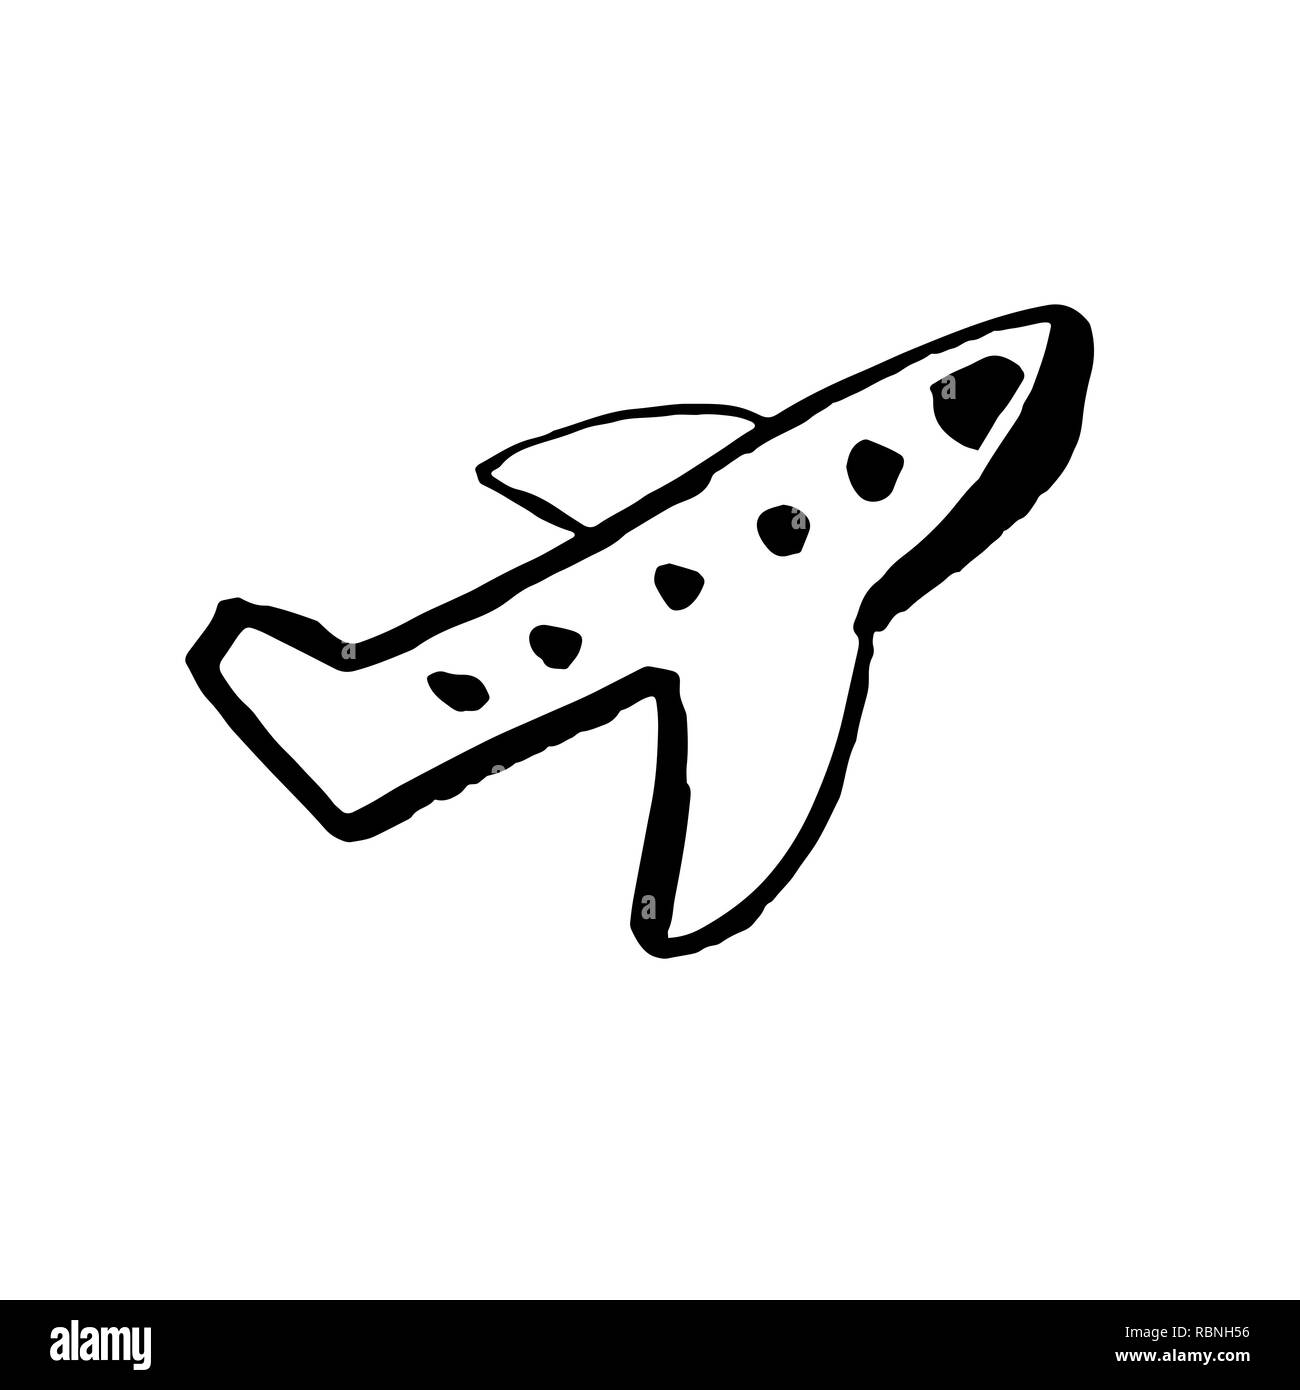 Plane grunge icon. Handdrawn ink vector air plane illustration. Stock Vector